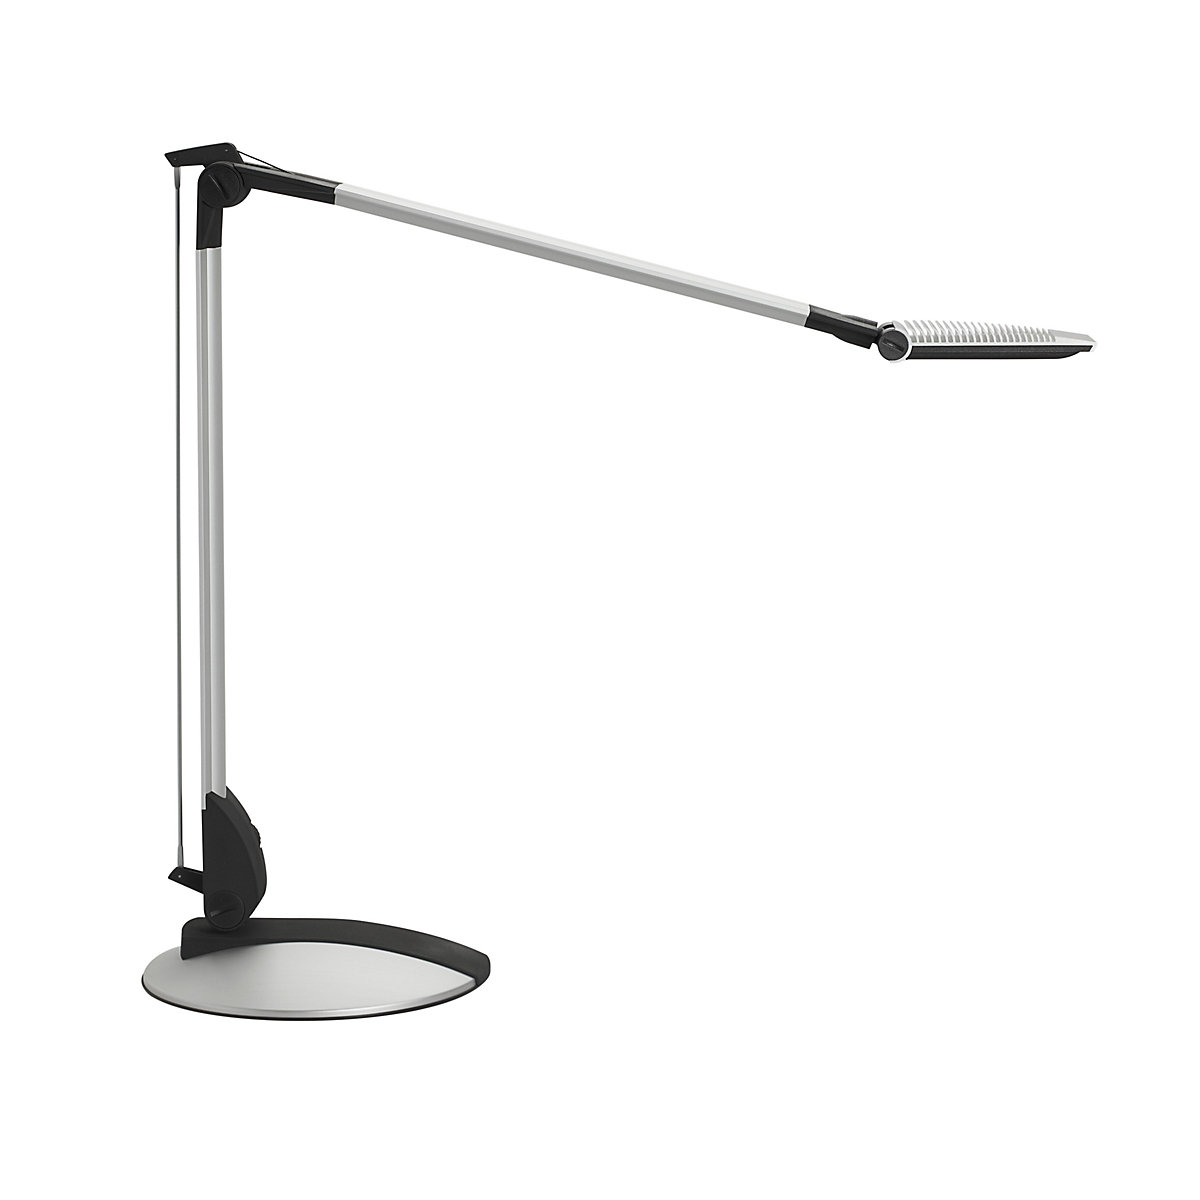 OPTIMUS COLOUR VARIO LED-es asztali lámpa – MAUL